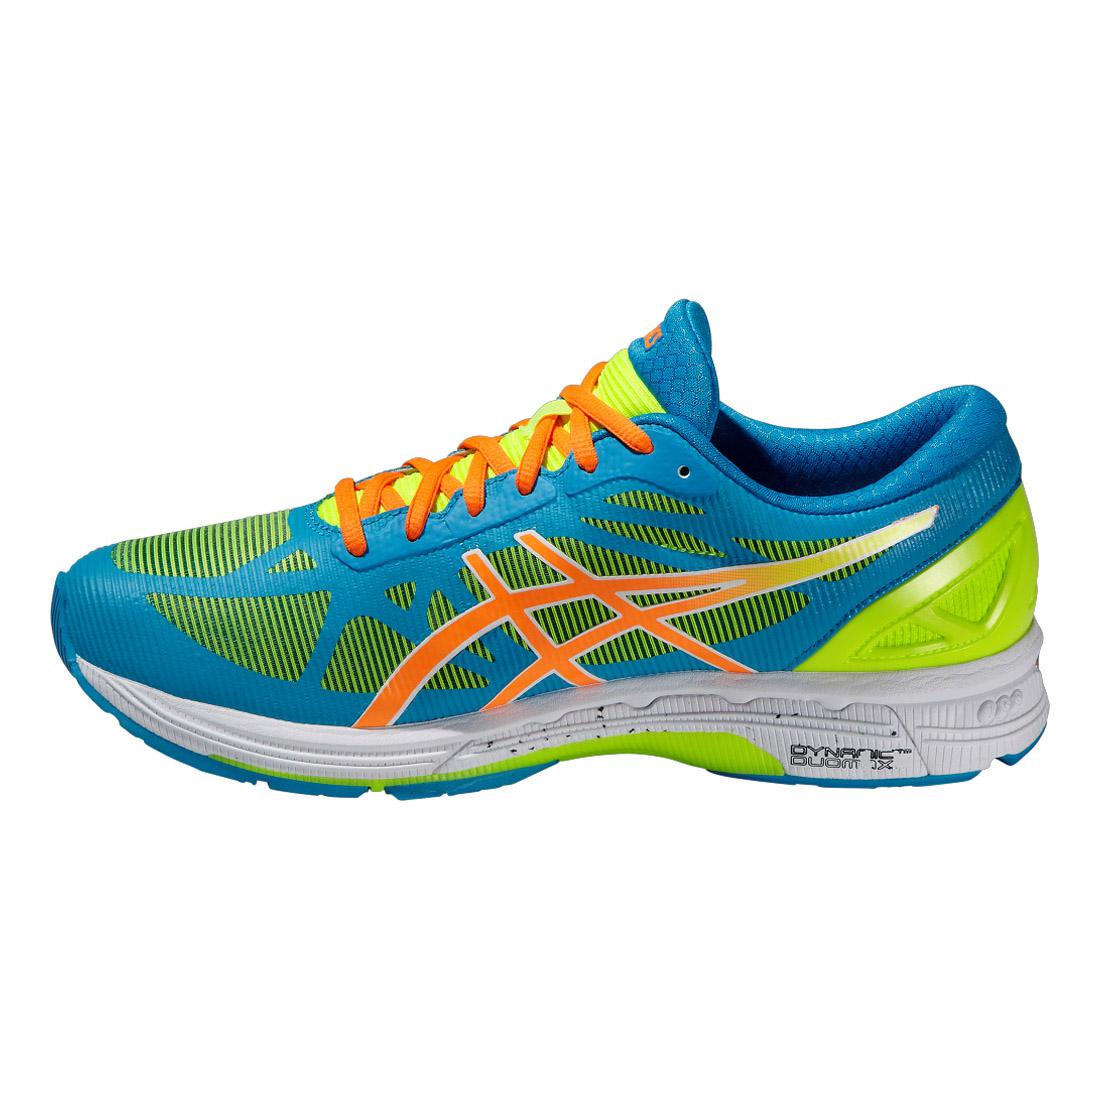 Asics Mens Gel DS Trainer 20 Running Shoes - Turquoise - Tennisnuts.com